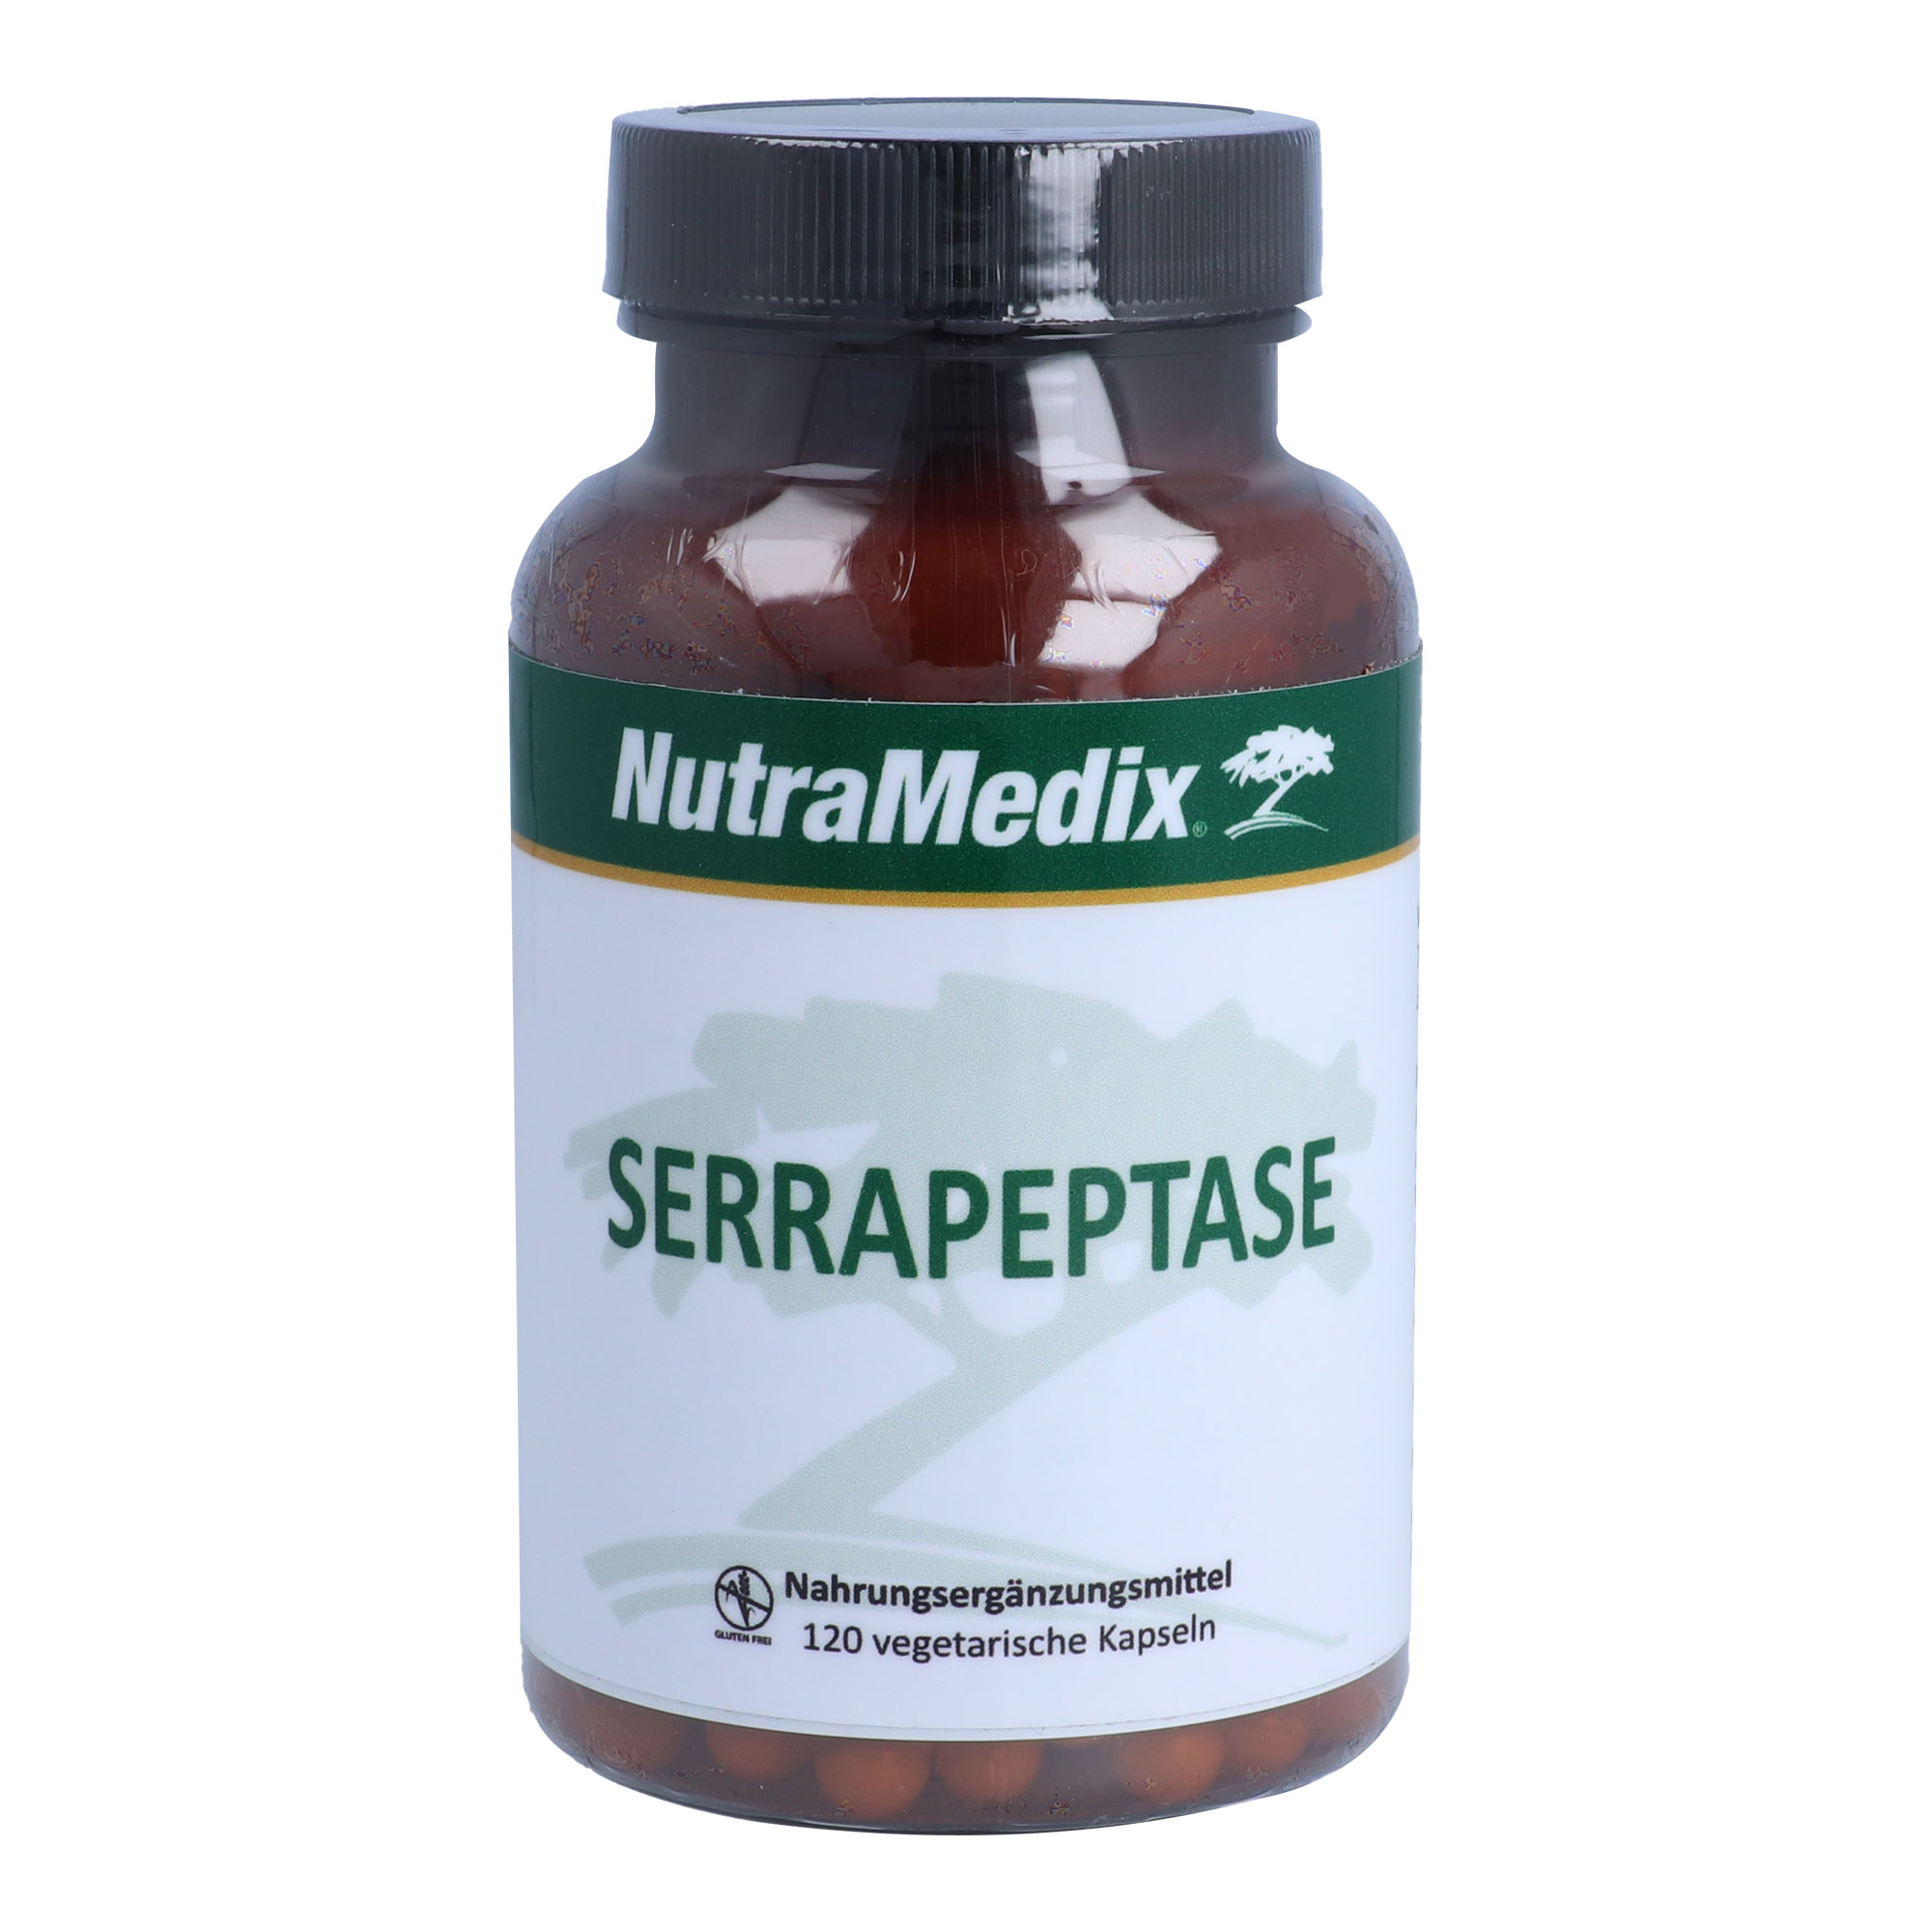 Nahrungsergänzungsmittel mit Serrapeptase.